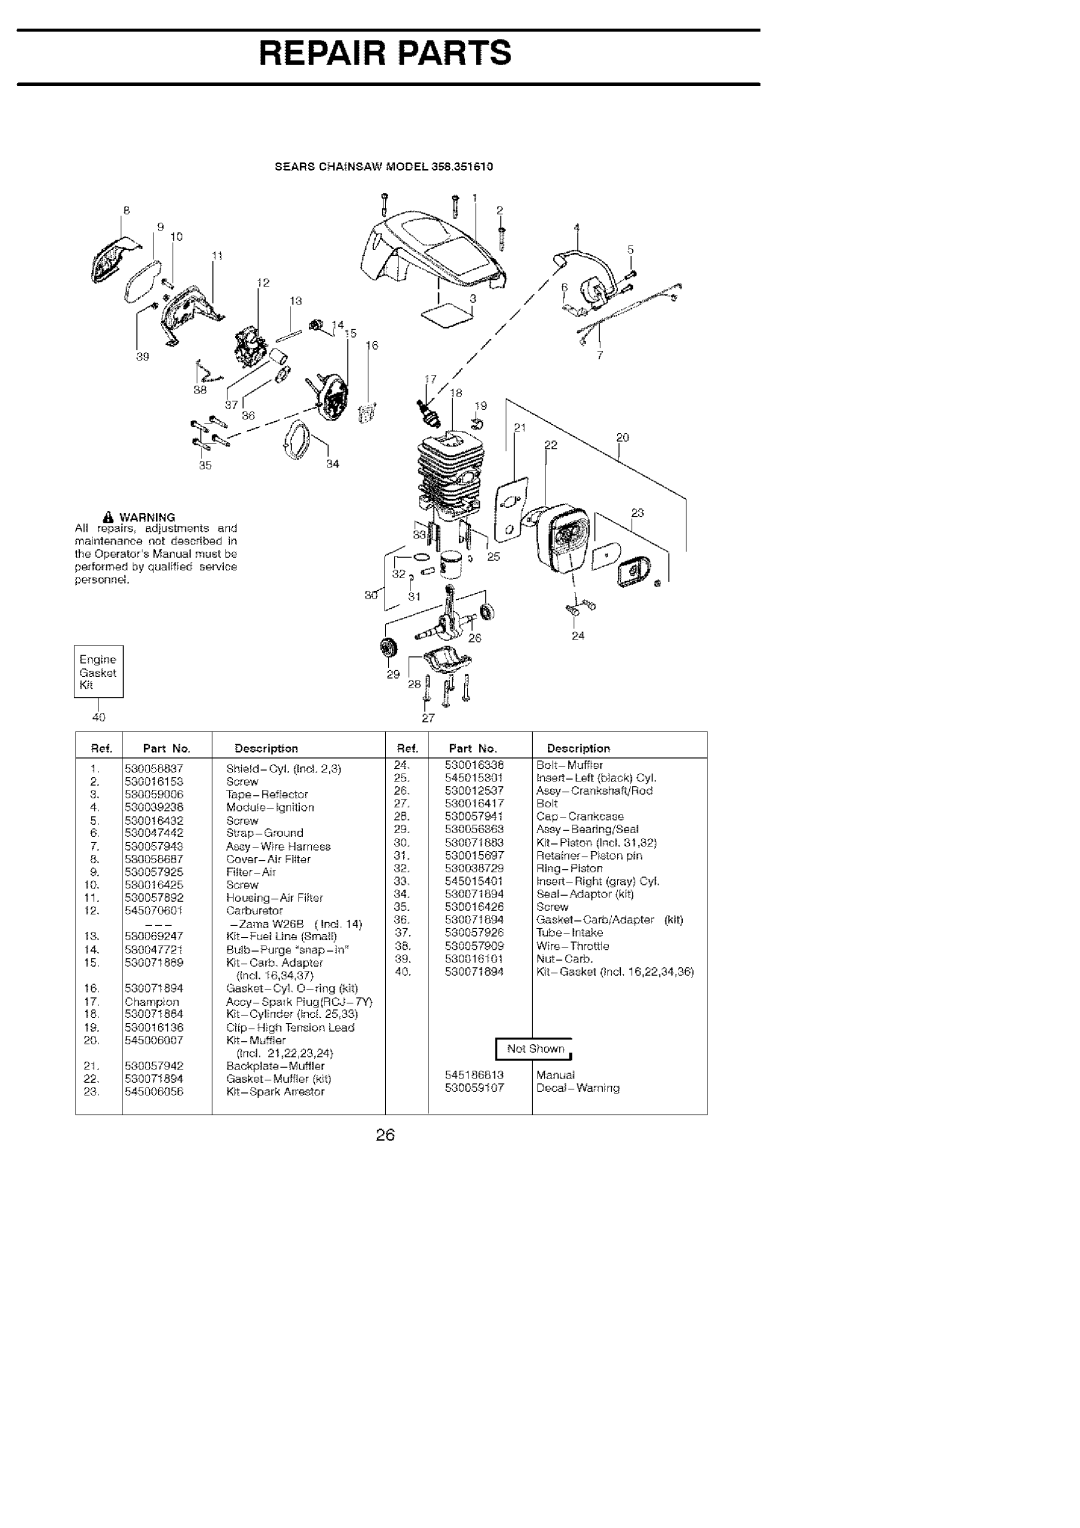 Craftsman 358.35161 manual Repair Parts, SEARS CHAtNSAW MODEL, 172hampion, Part No, Piston 